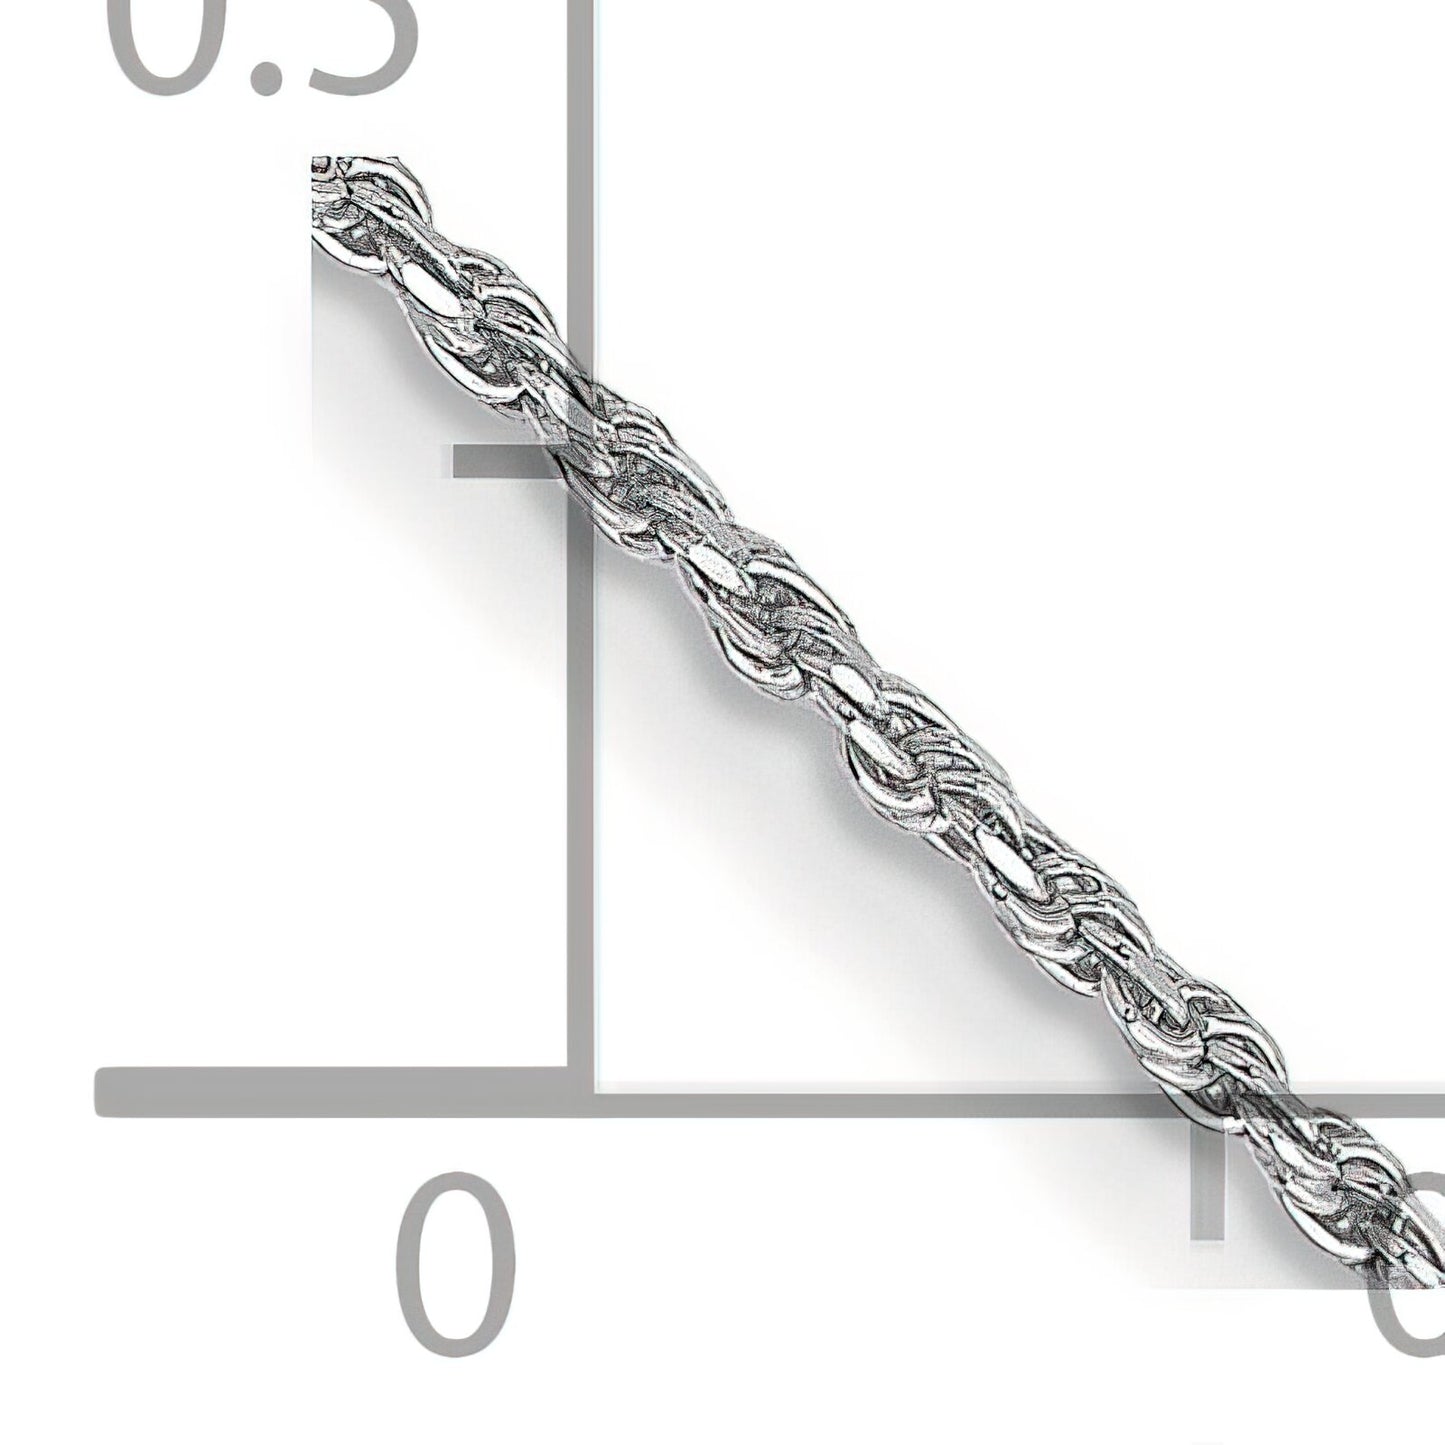 10K White Gold 1.2mm Diamond Cut Rope Chain Bracelet